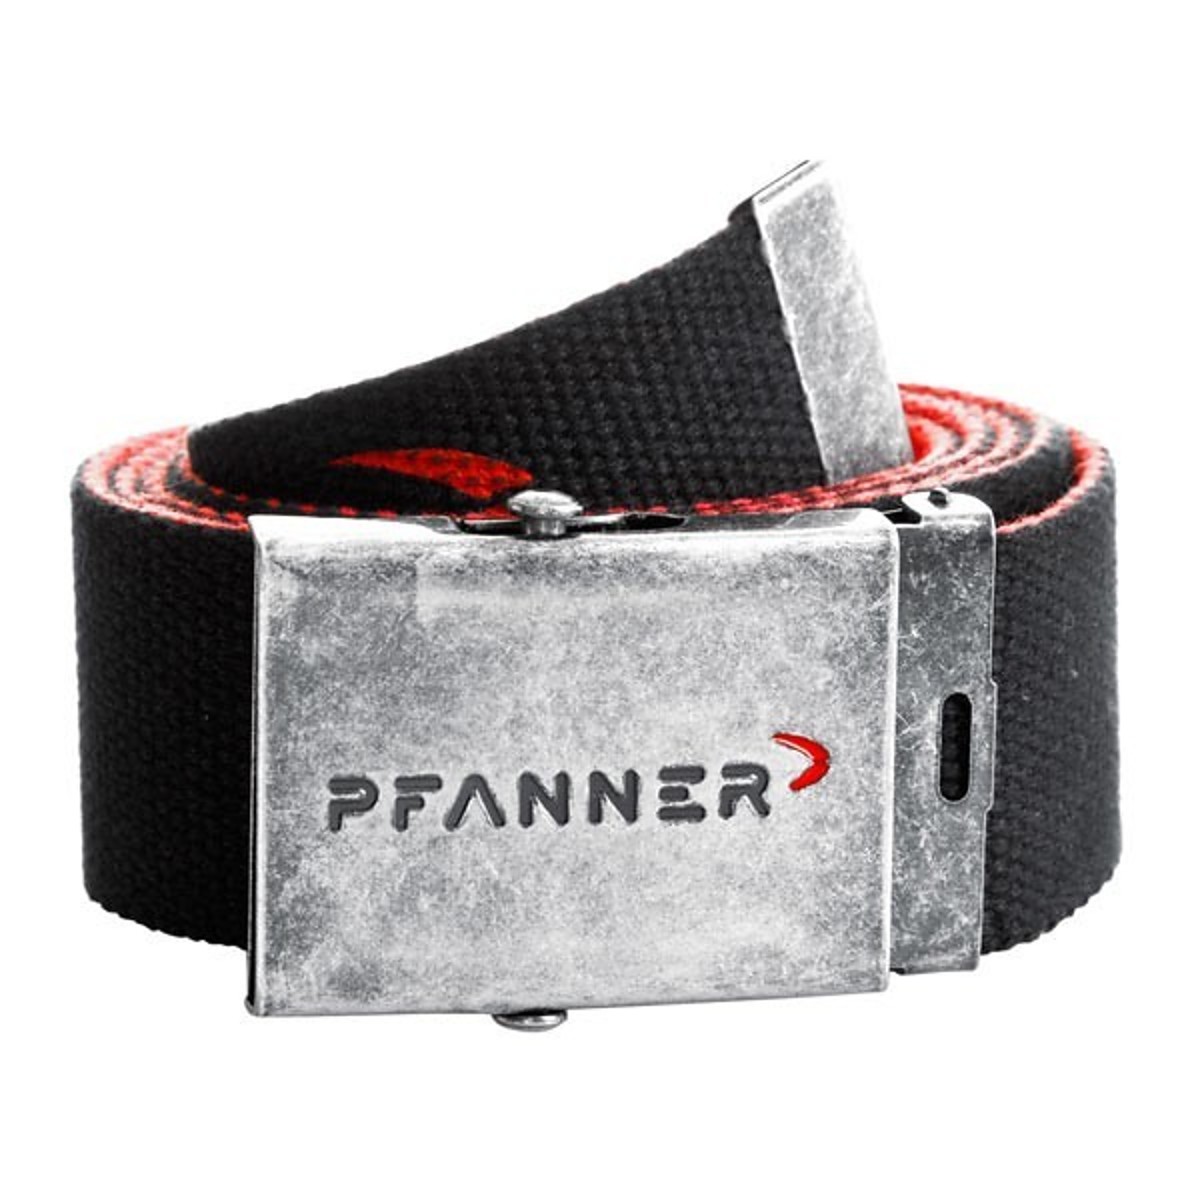 Pfanner belt with metal buckle